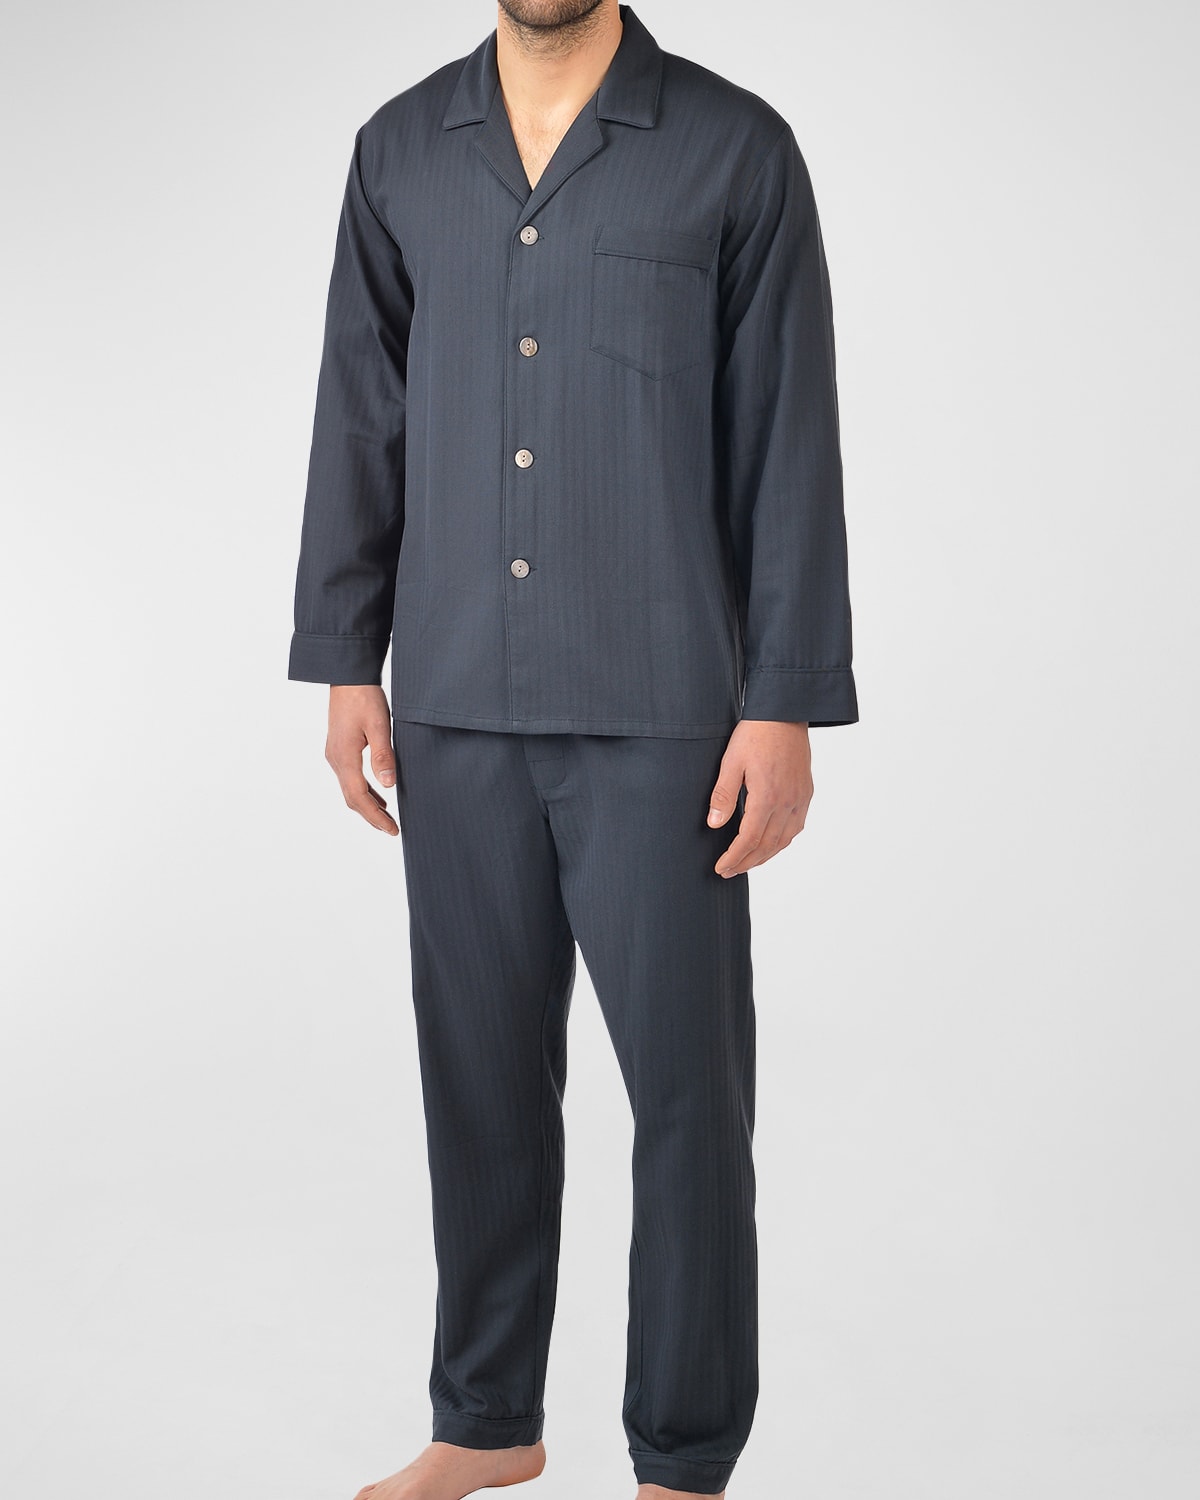 Neiman Marcus Men's Plaid Luxurious Cotton Pajama Set | Neiman Marcus